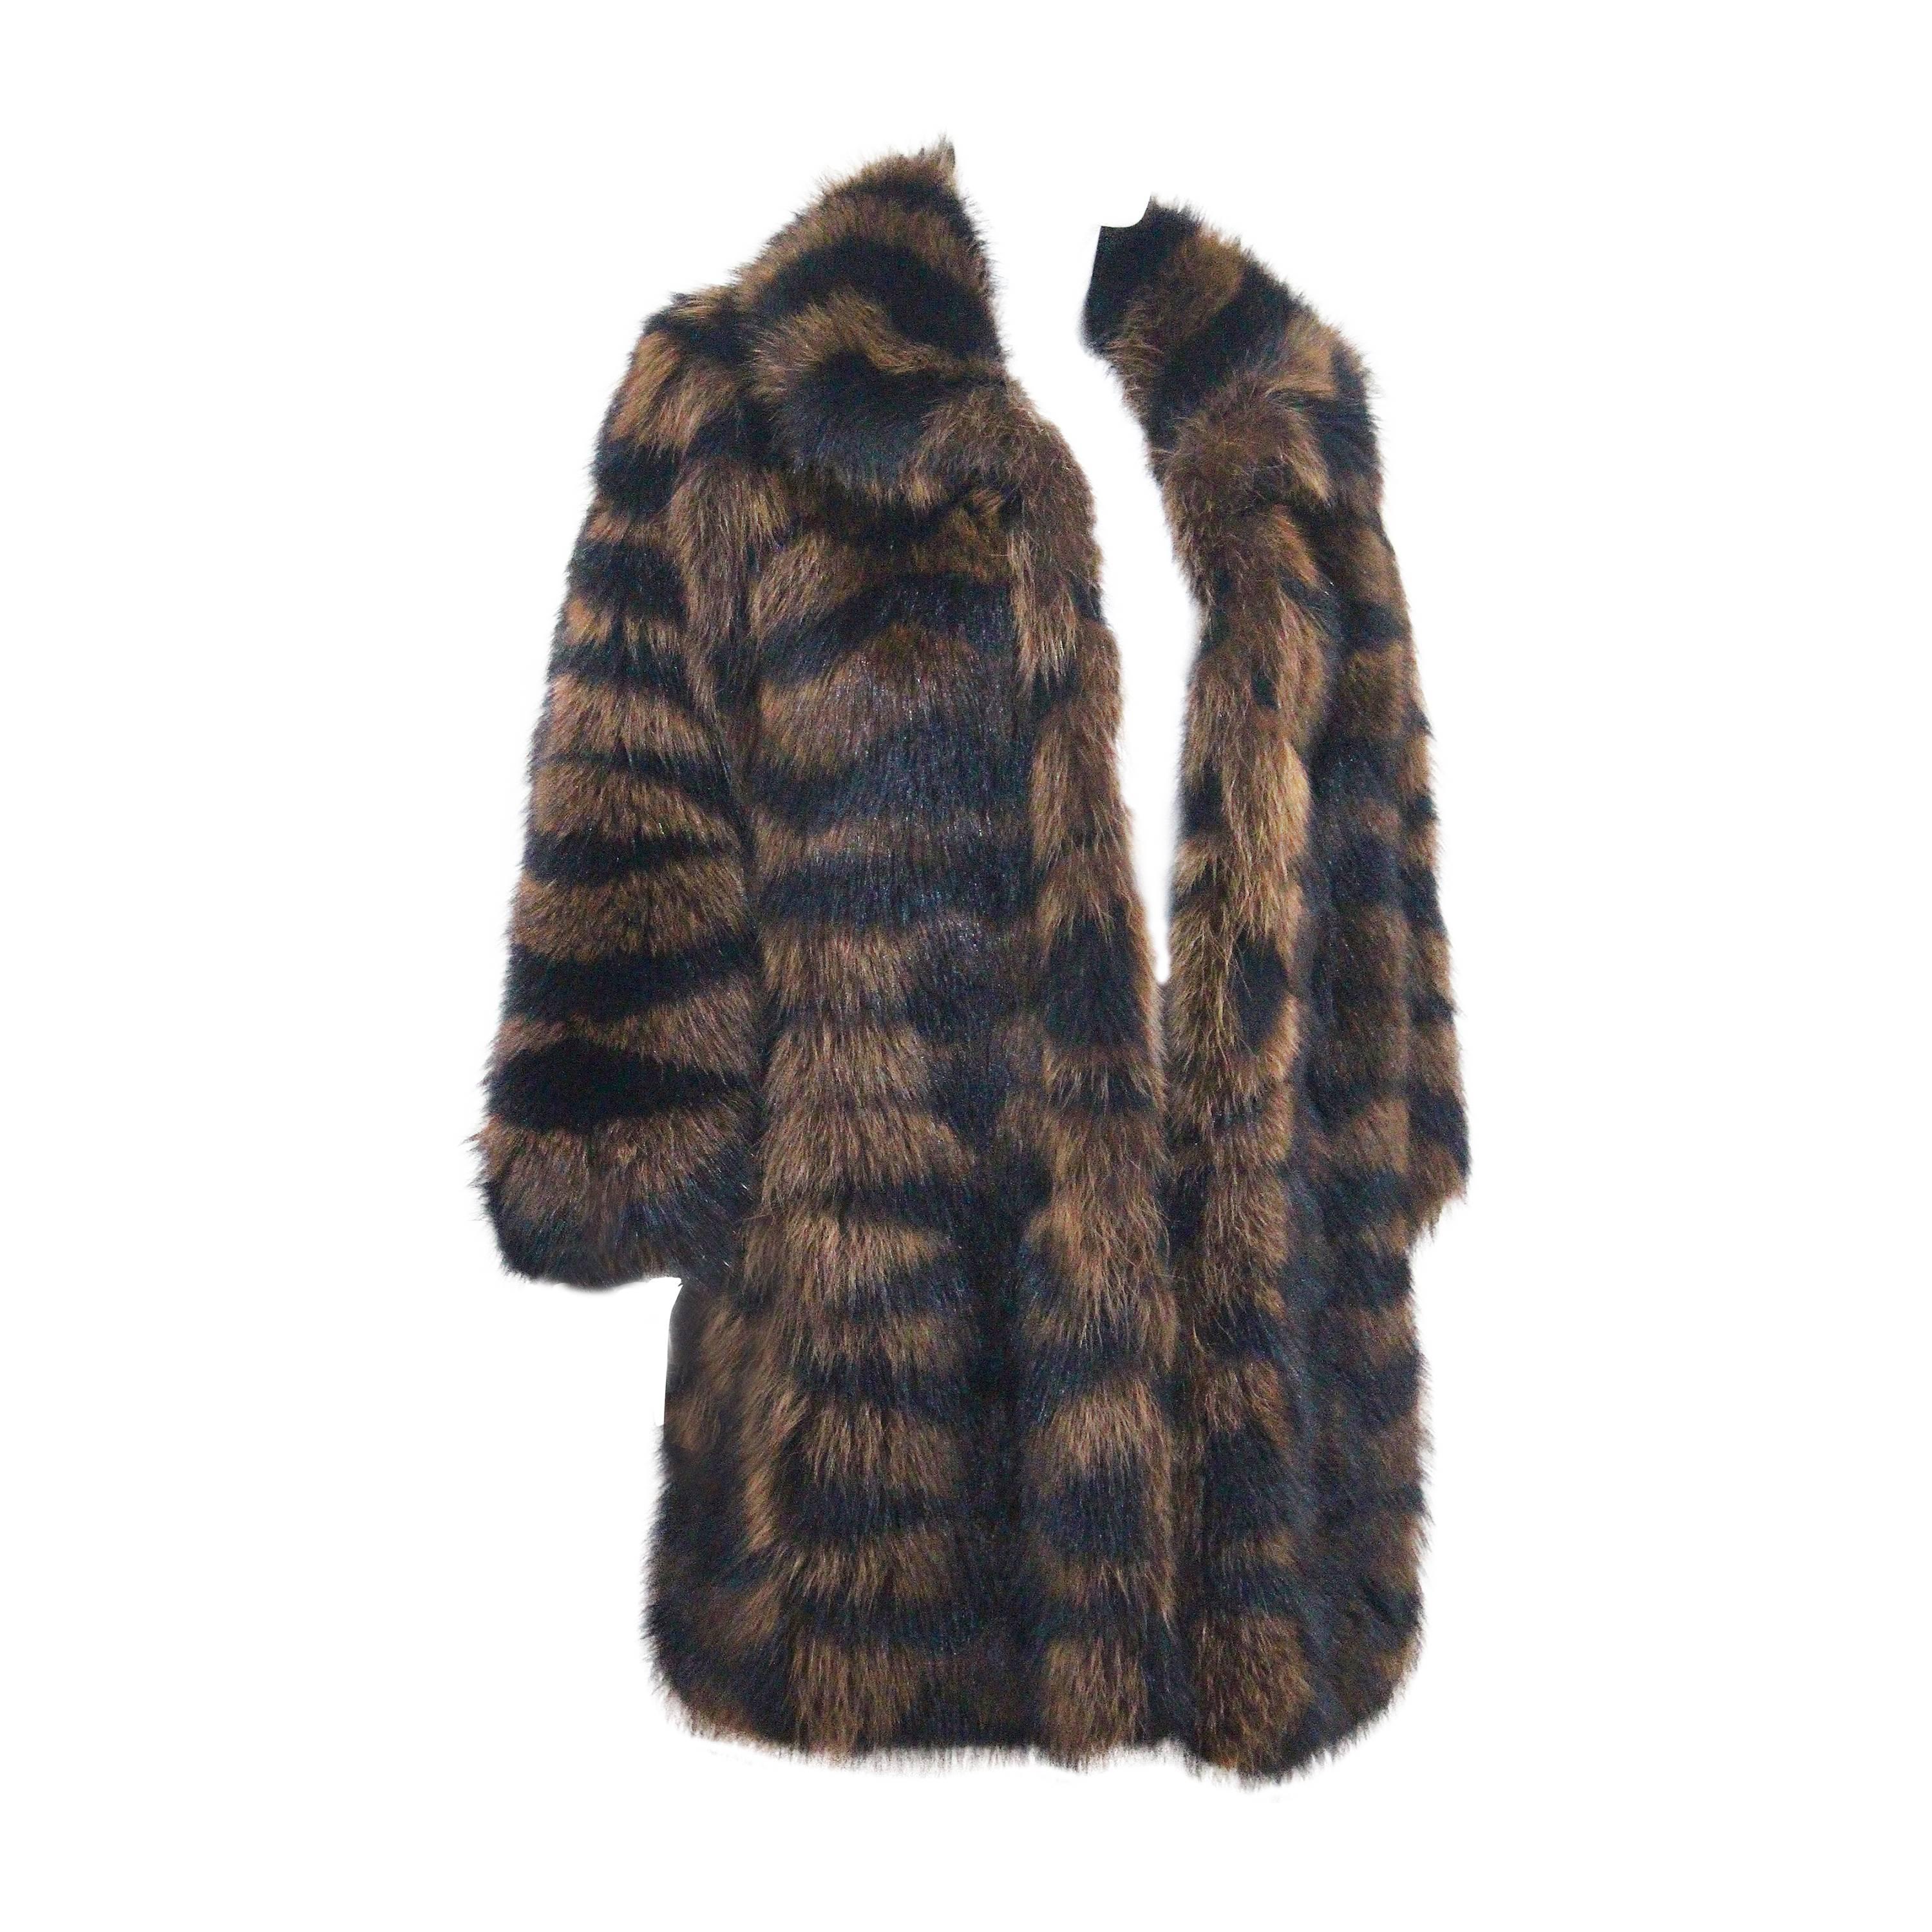 Exceptional Yves Saint Laurent Beaver Fur Coat c. 1980s